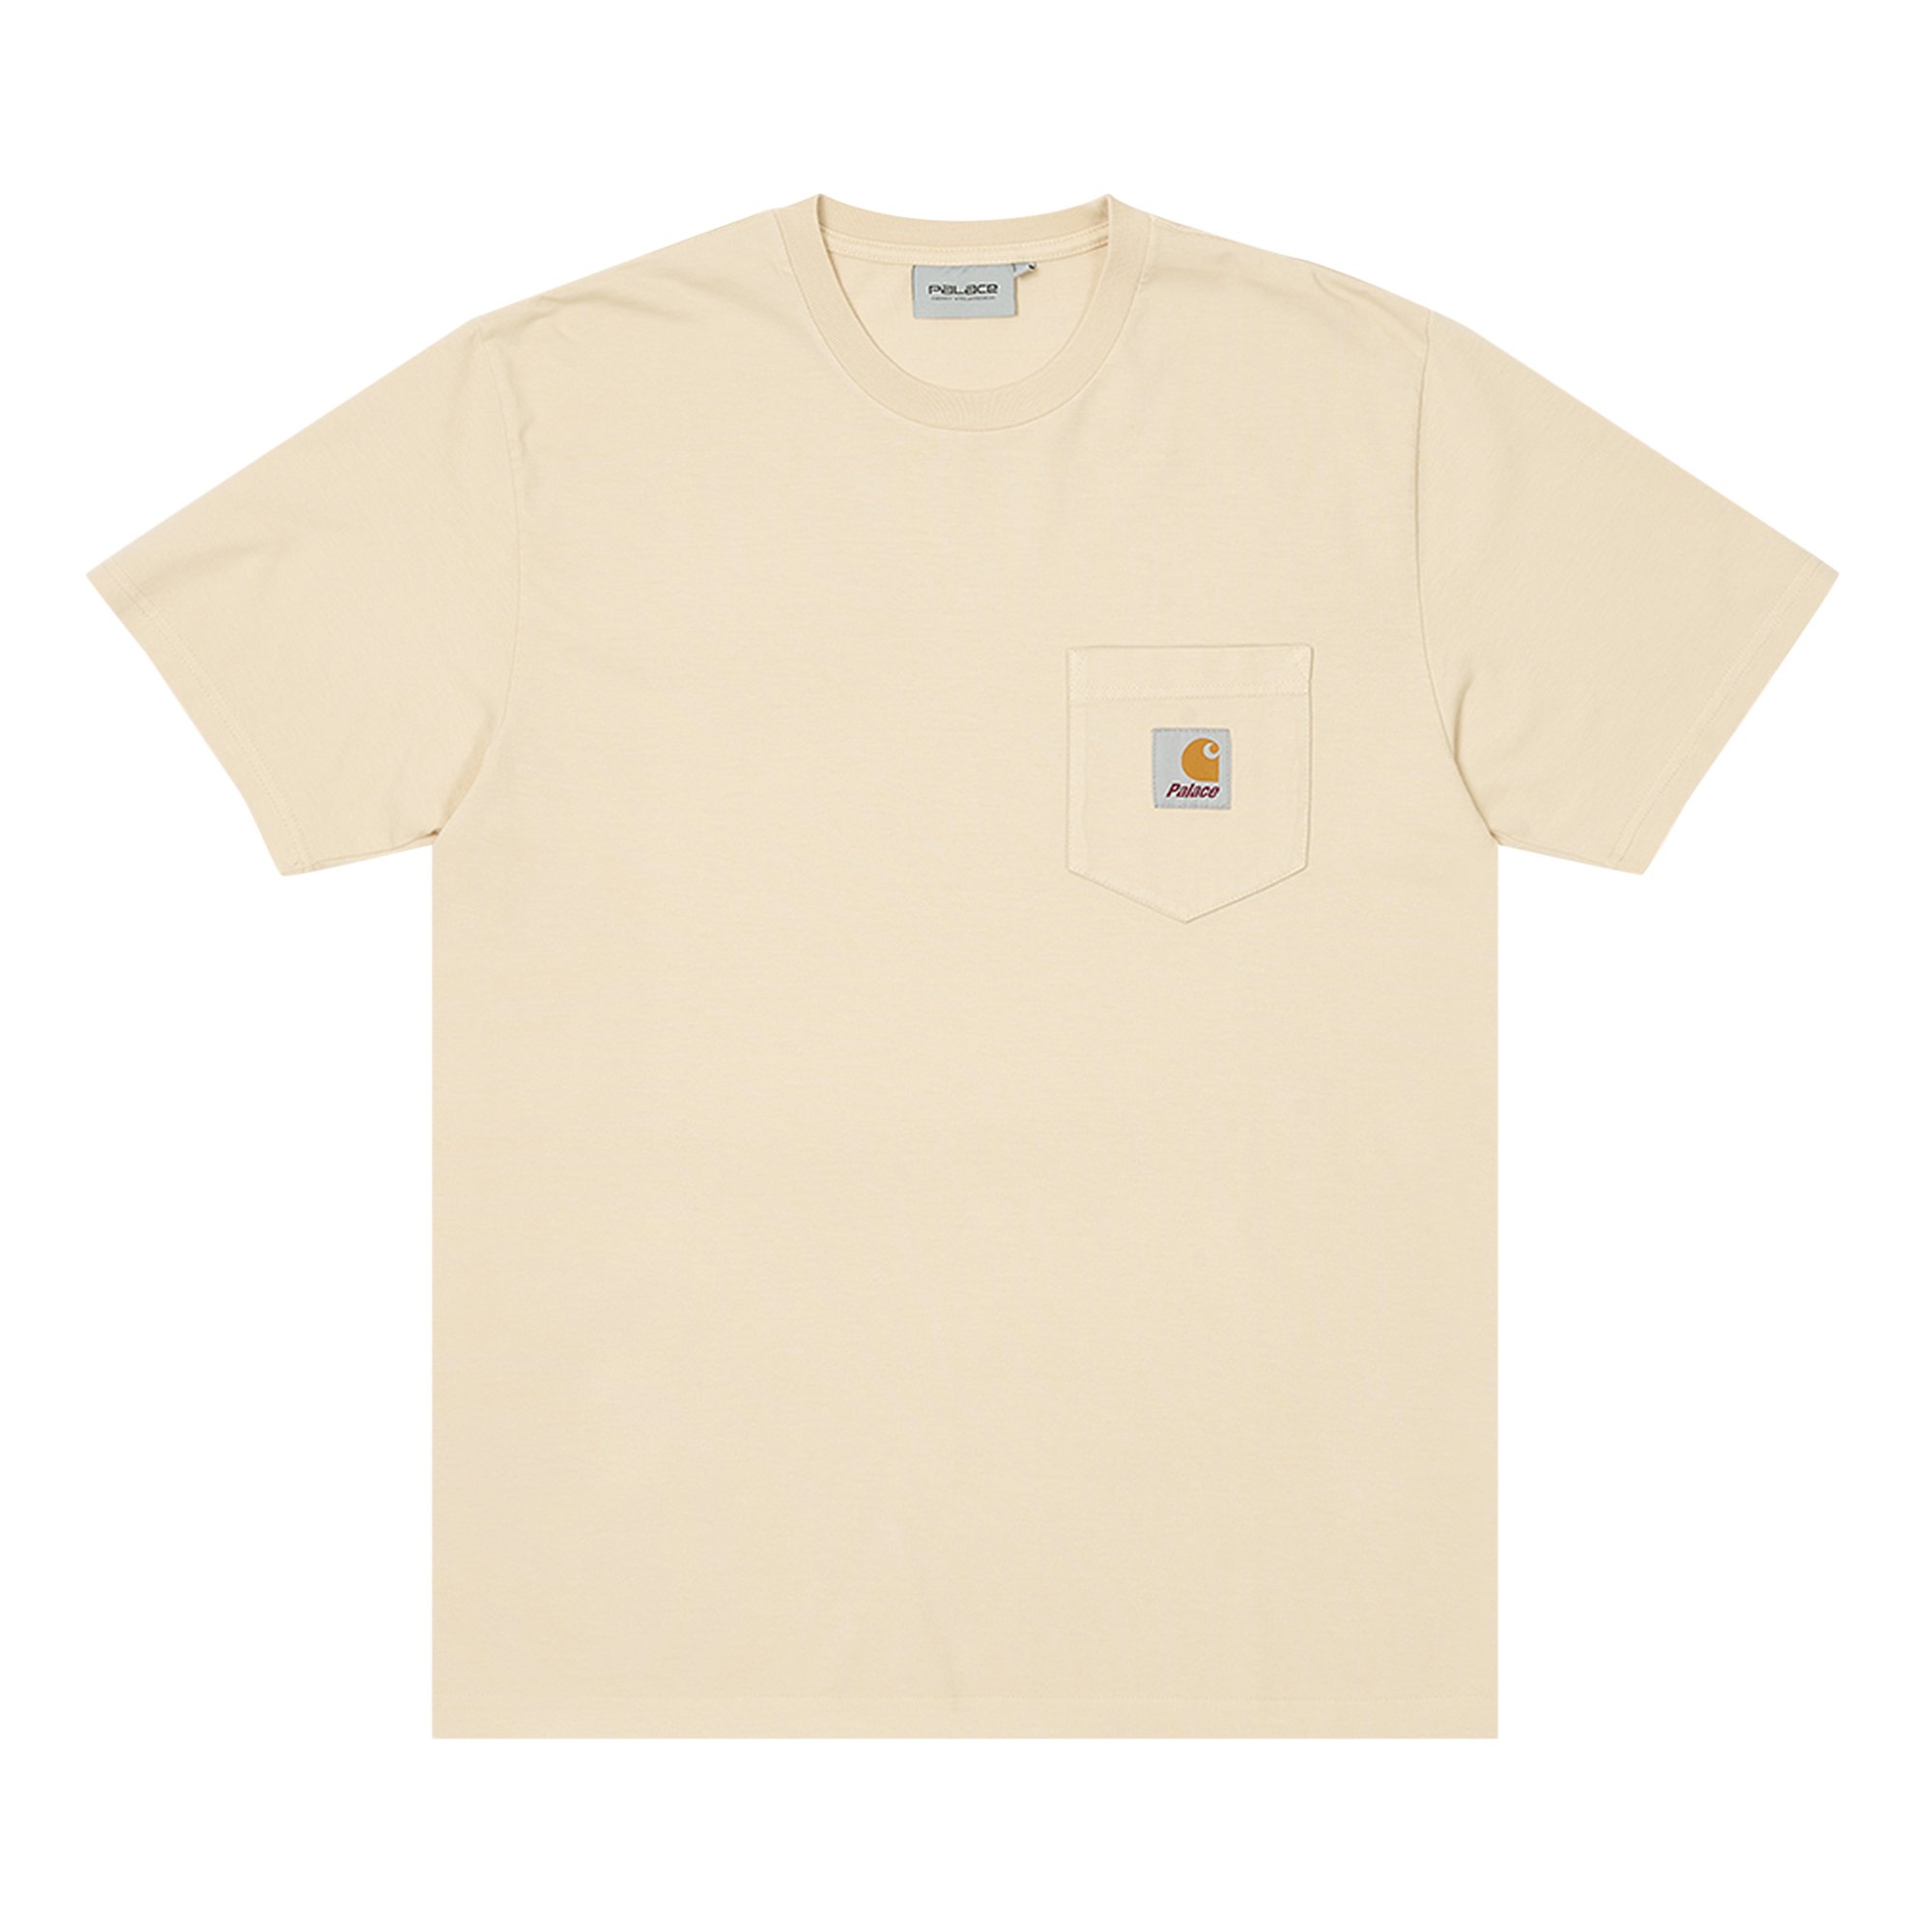 Carhartt WIP x Palace Short-Sleeve Pocket T-Shirt 'Palace Wax'